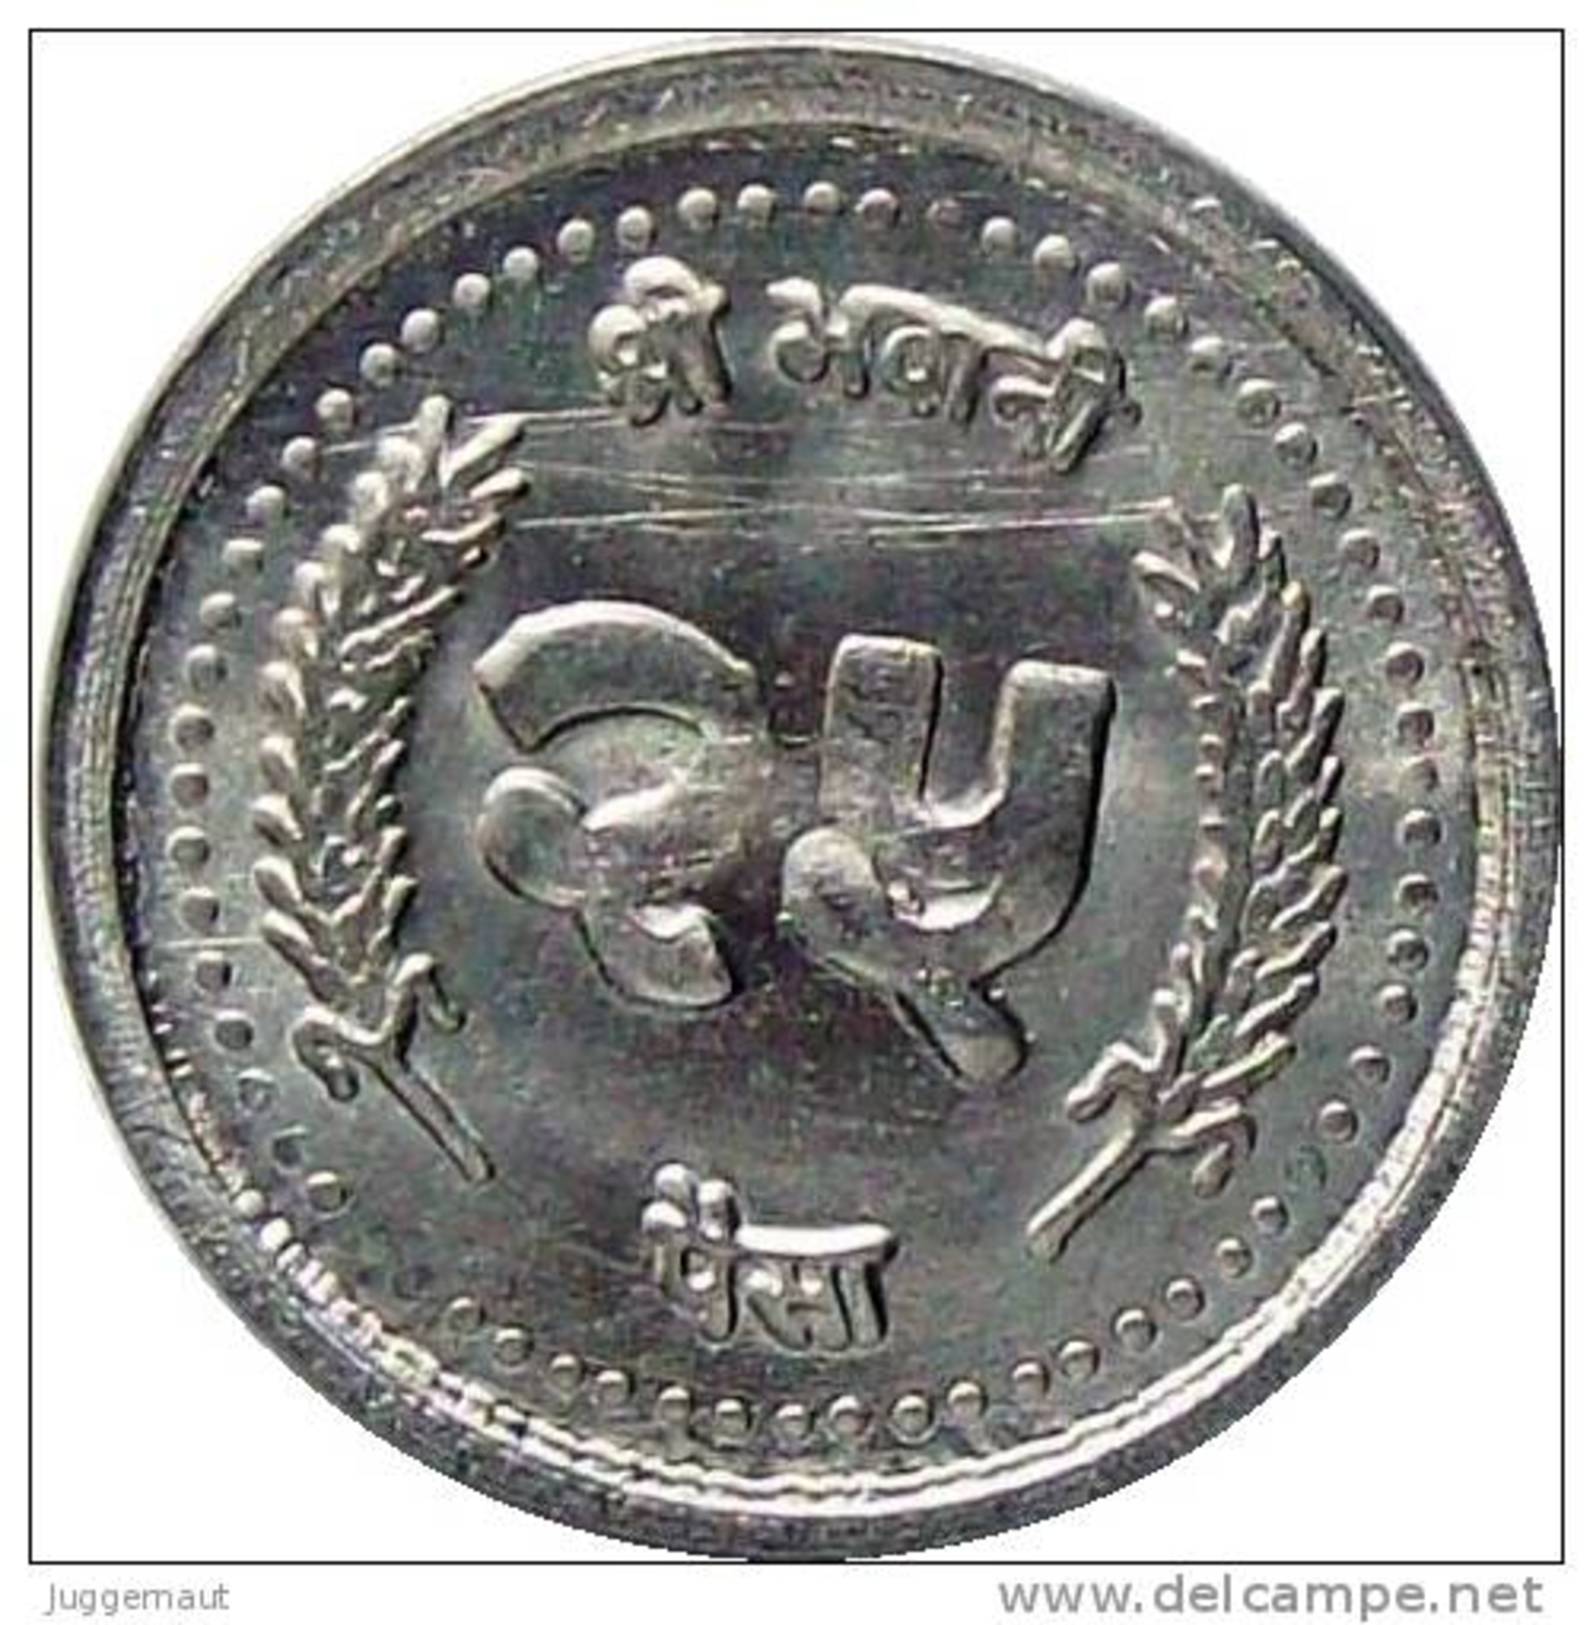 NEPAL 25 PAISA ALUMINUM REGULAR CIRCULATION COIN 2003 KM-1148 UNCIRCULATED UNC - Nepal